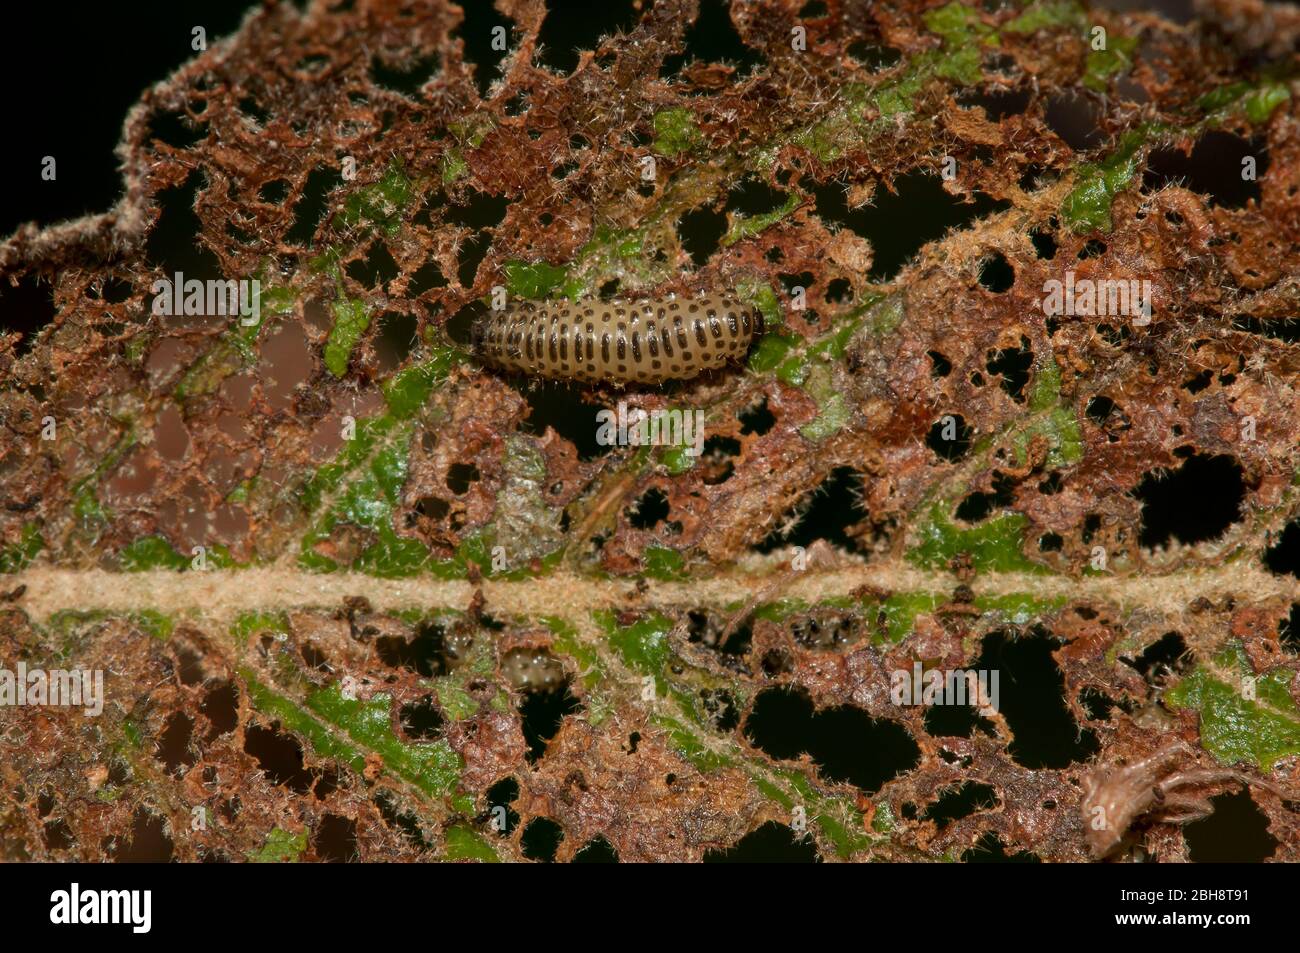 Caterpillar creeping on holey leaf, Bavaria, Germany Stock Photo